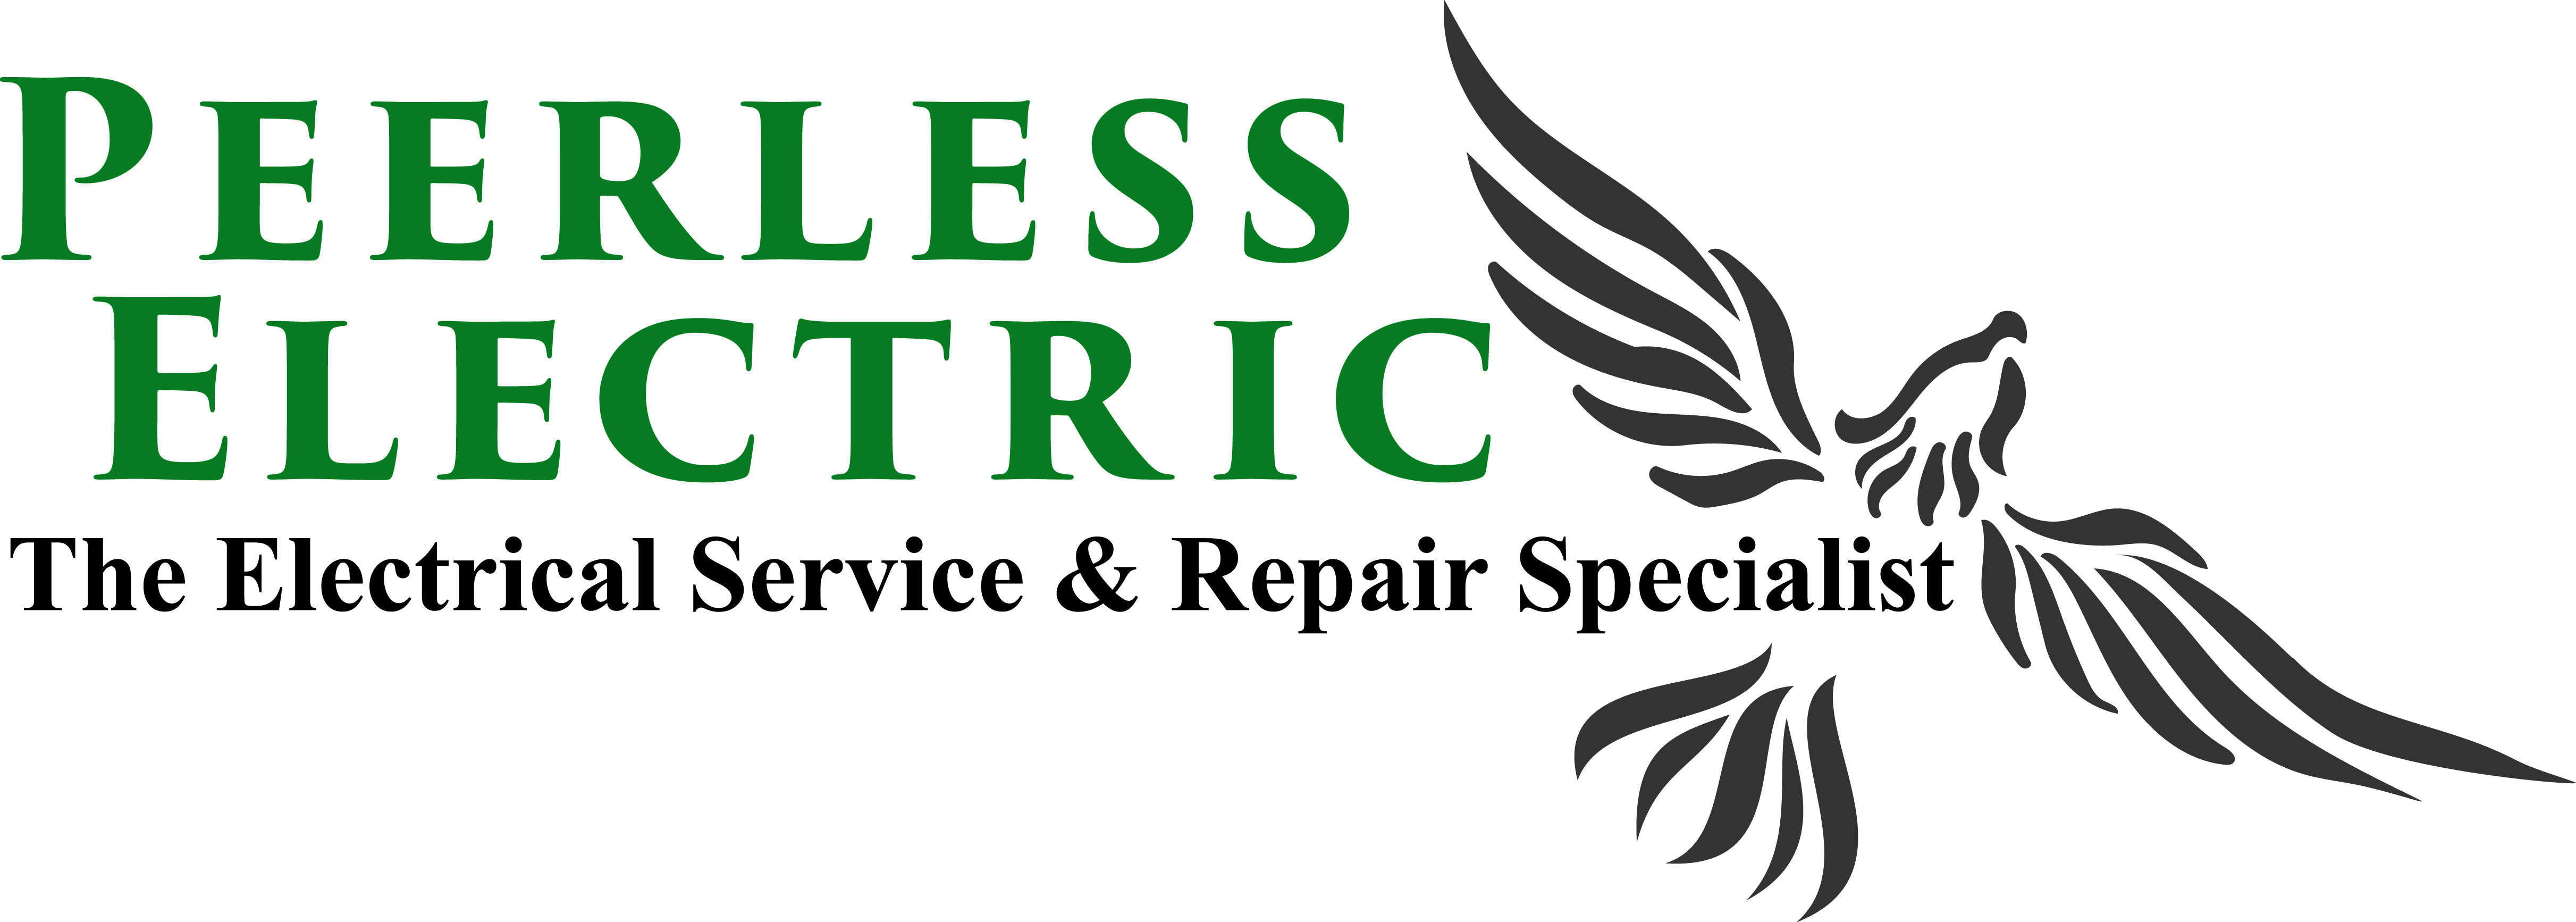 Peerless Electric Co., Inc. Logo